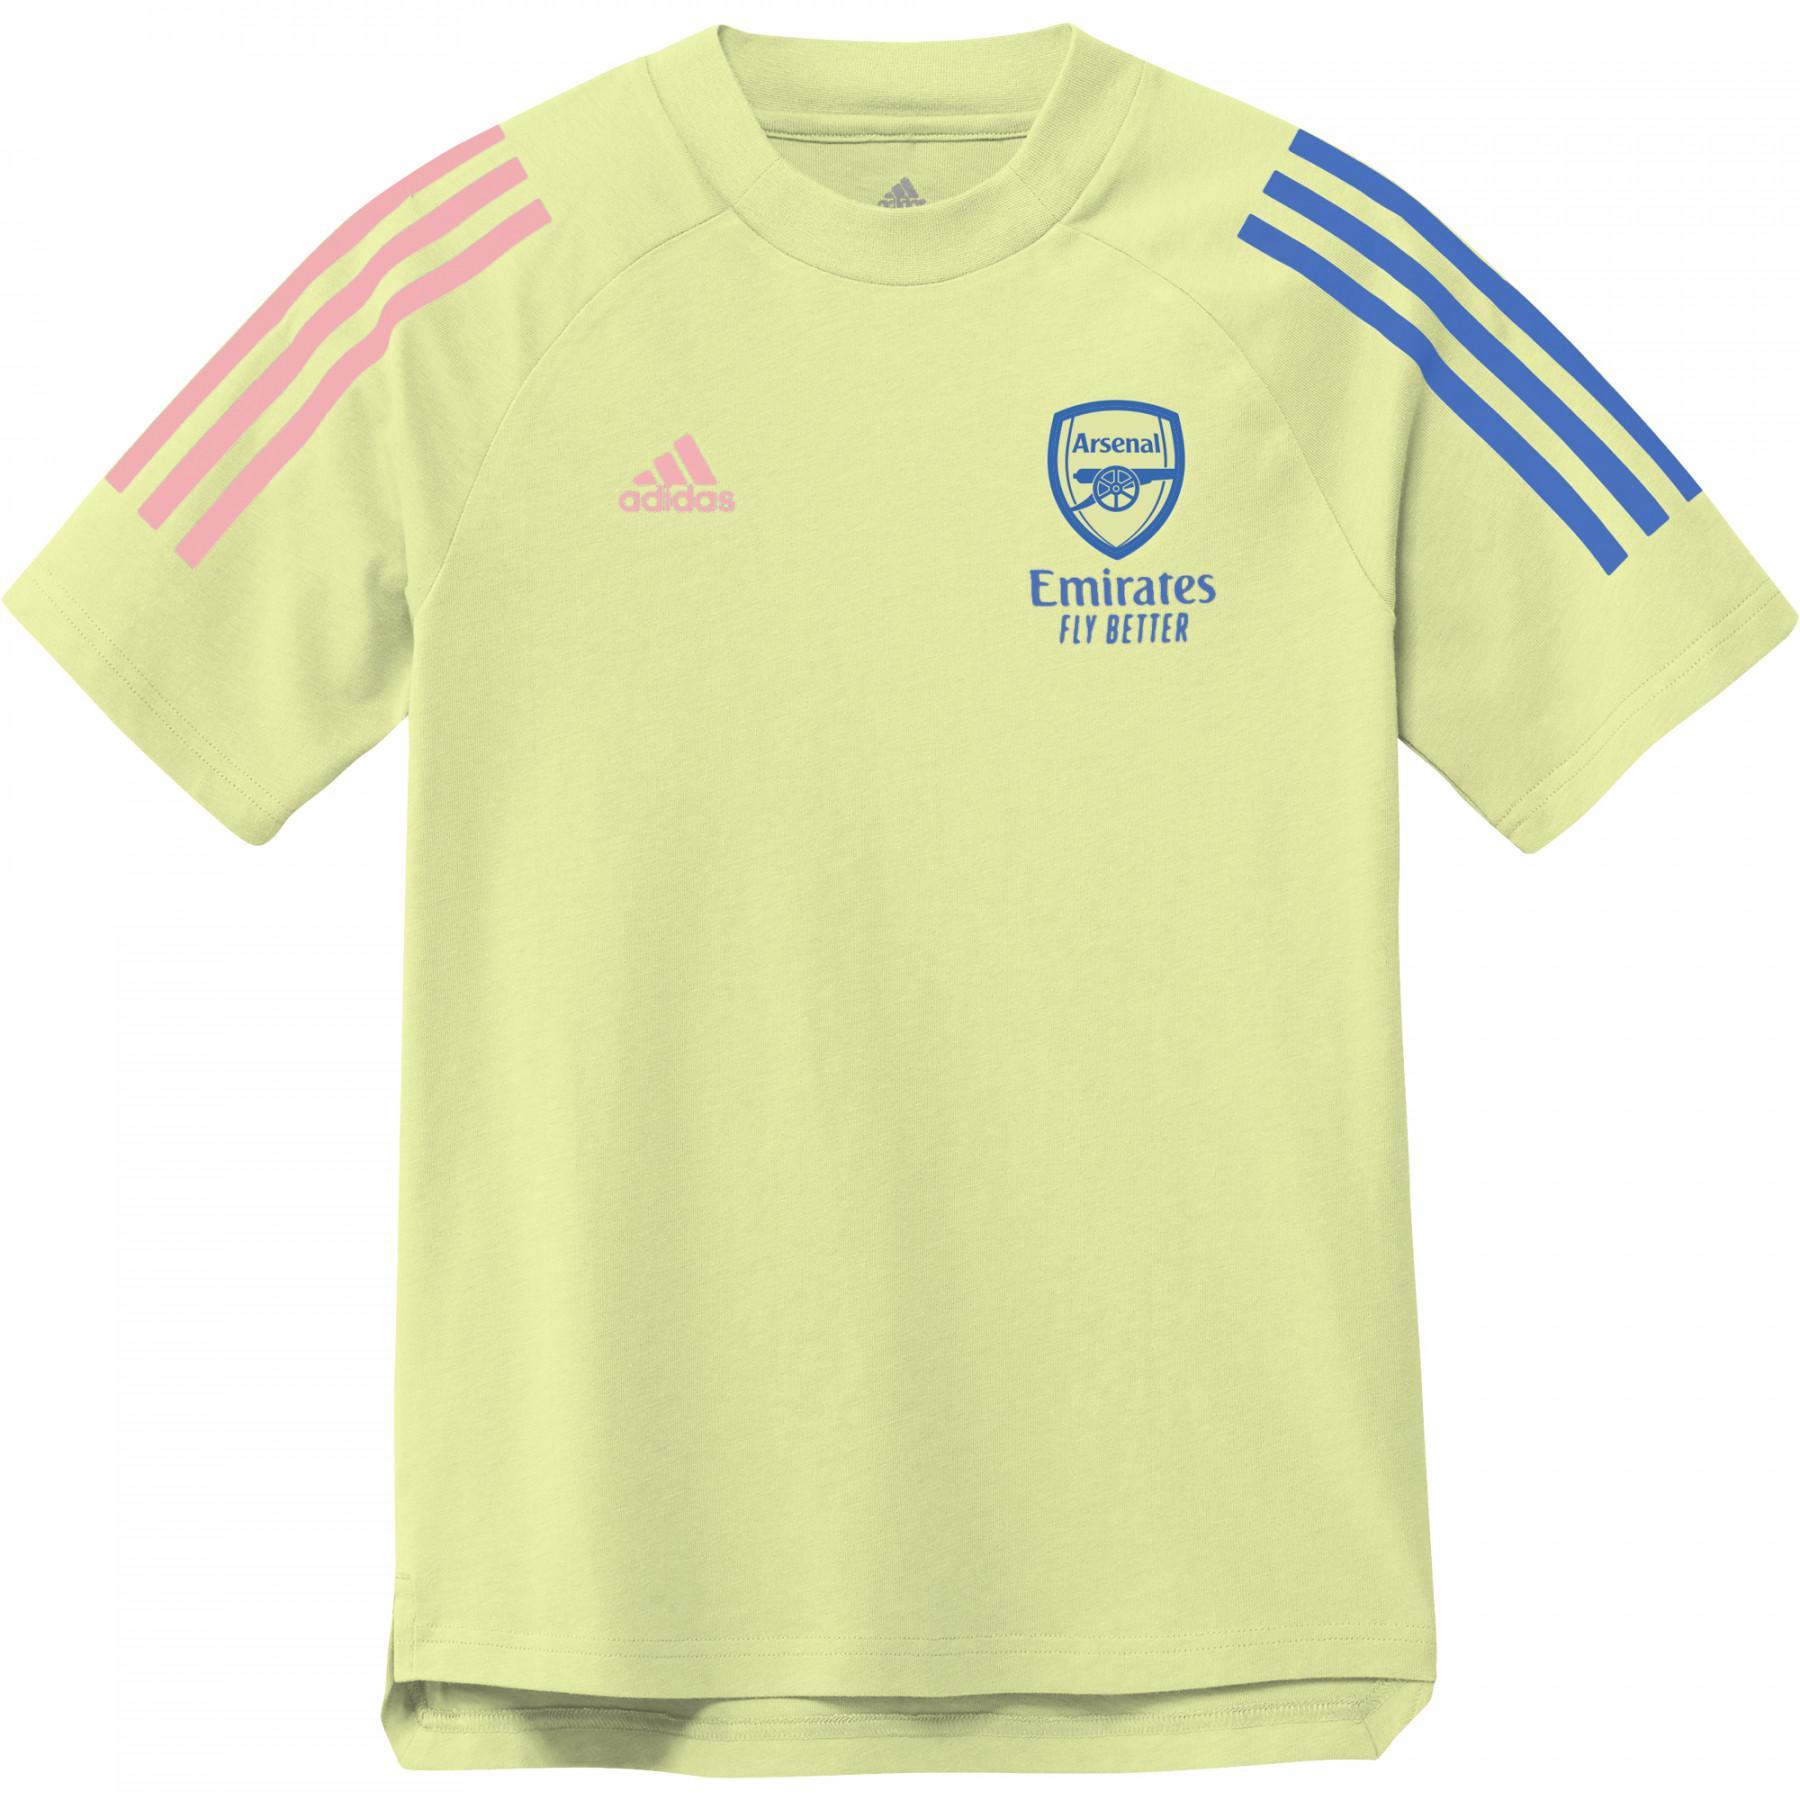 Child's T-shirt Arsenal 2020/21